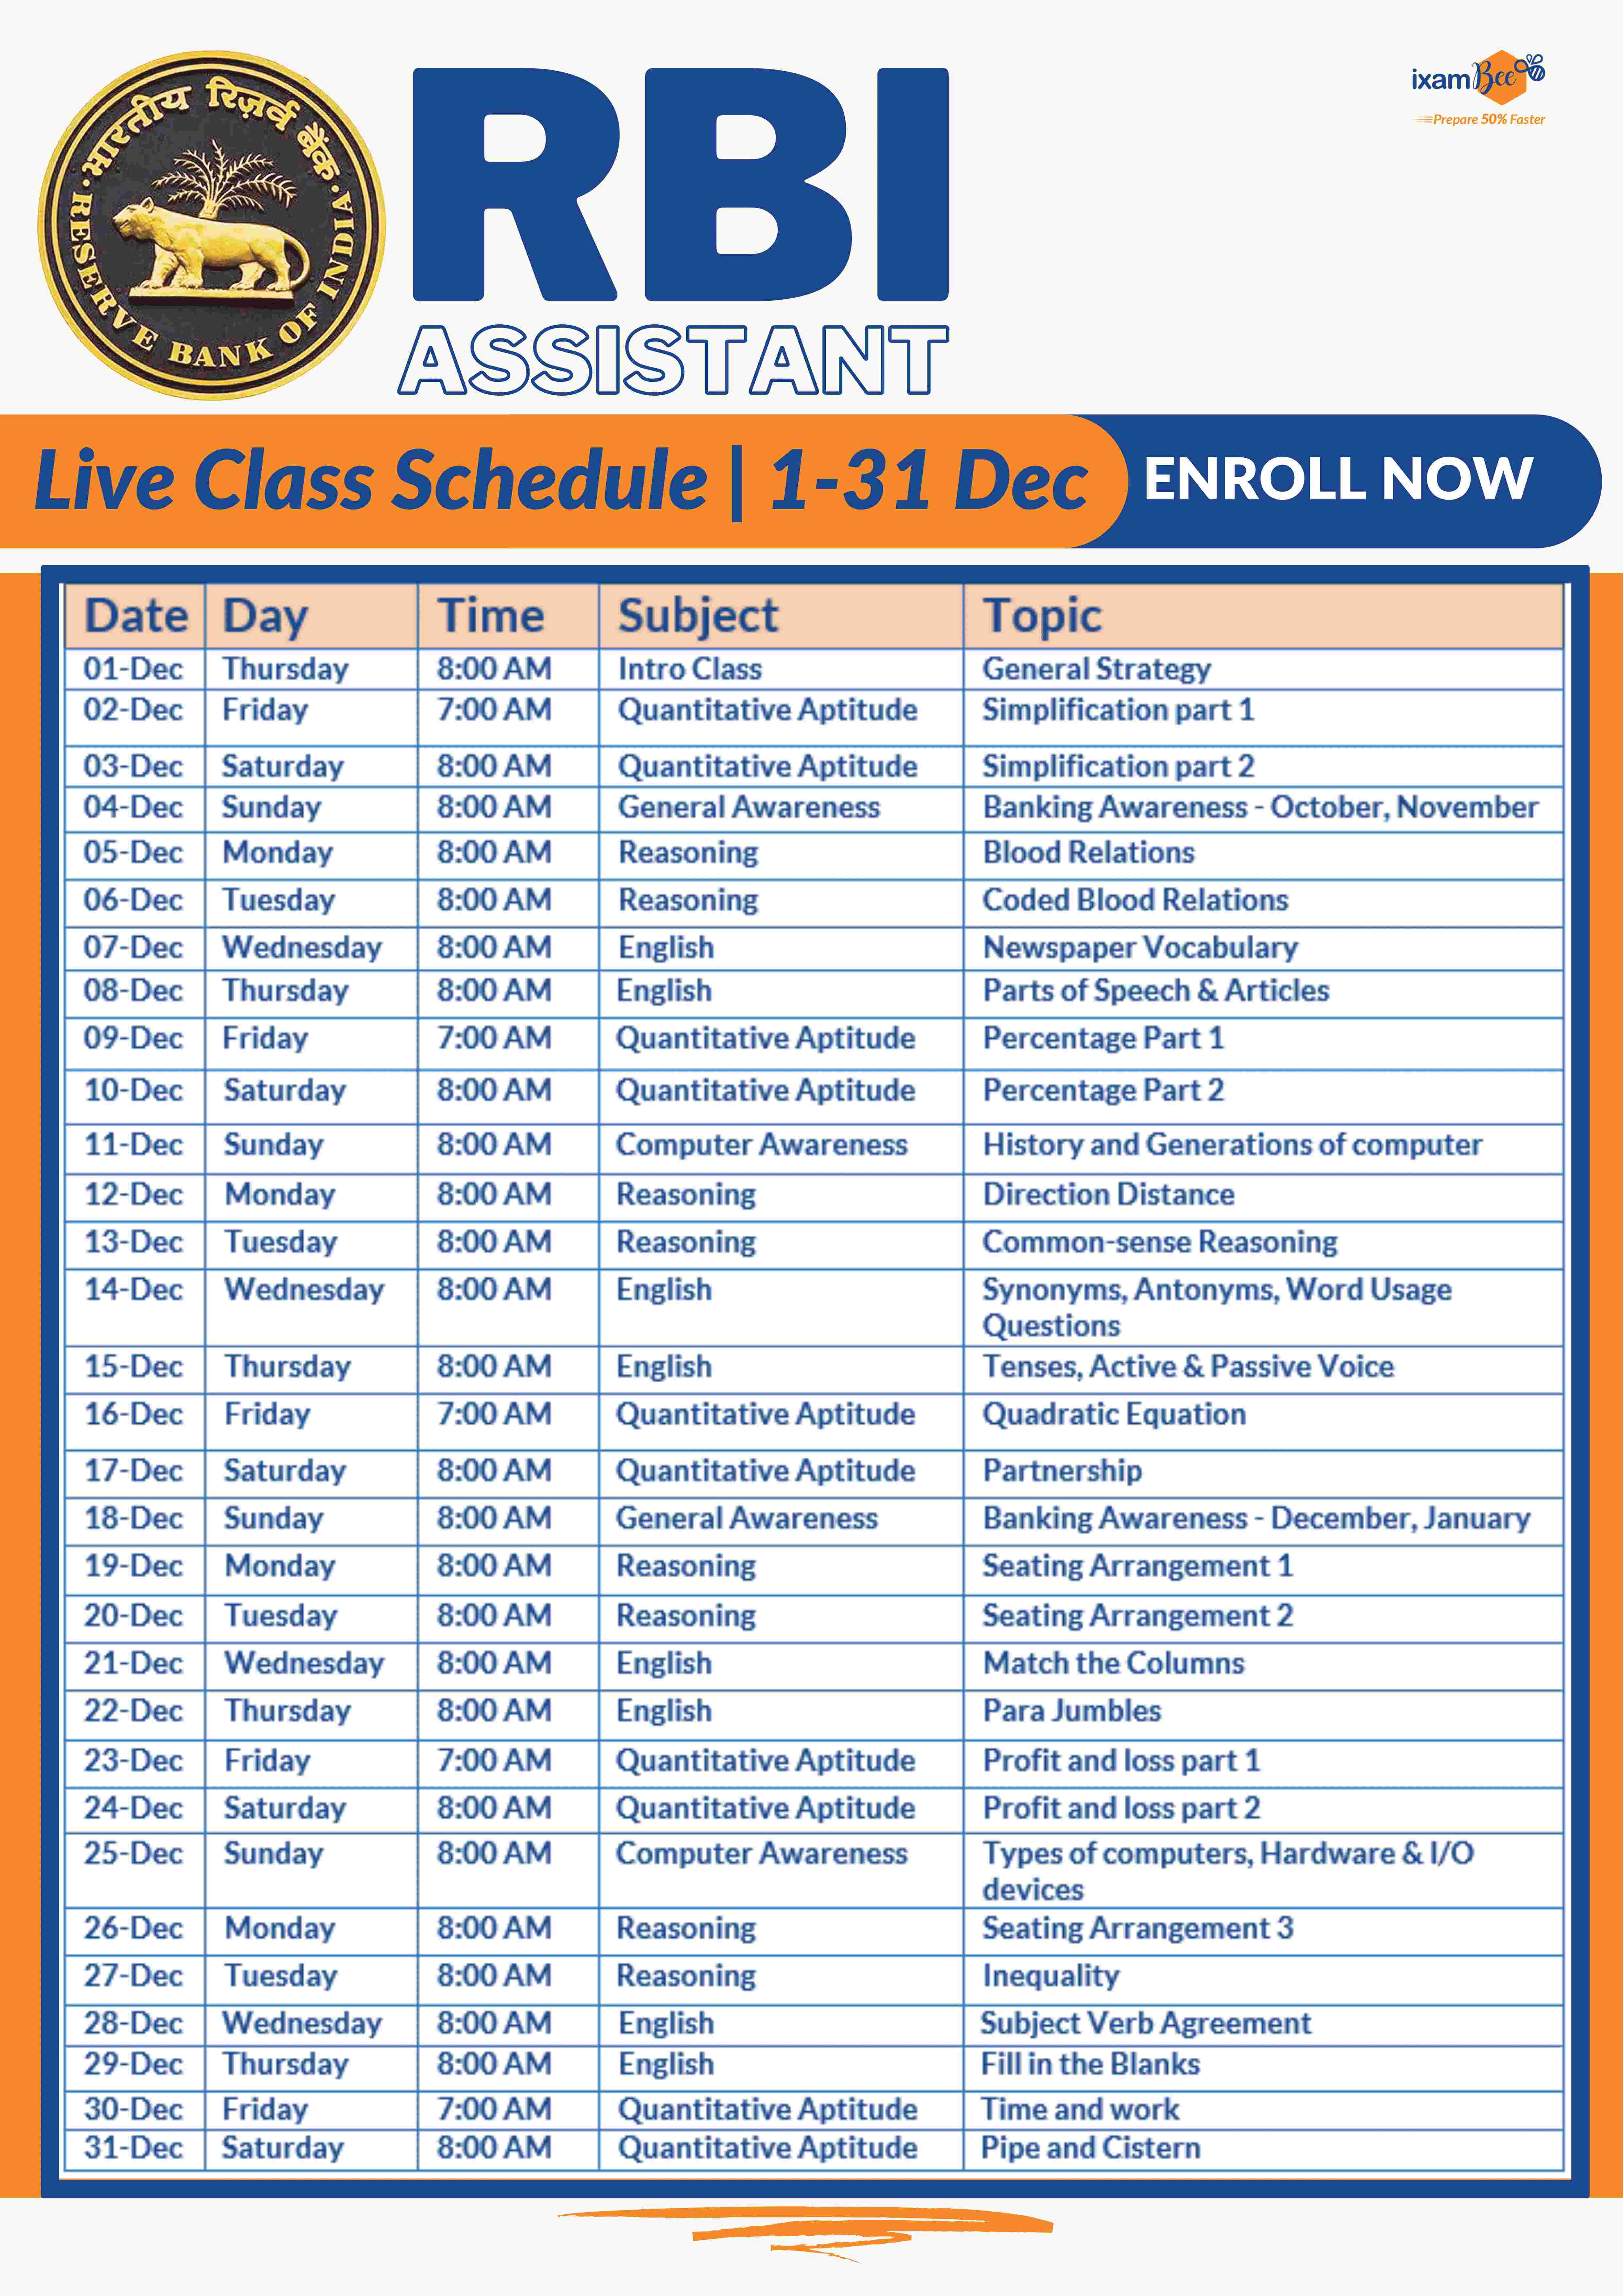 RBI Assistant Live Class Schedule (Dec 01-31 2022)